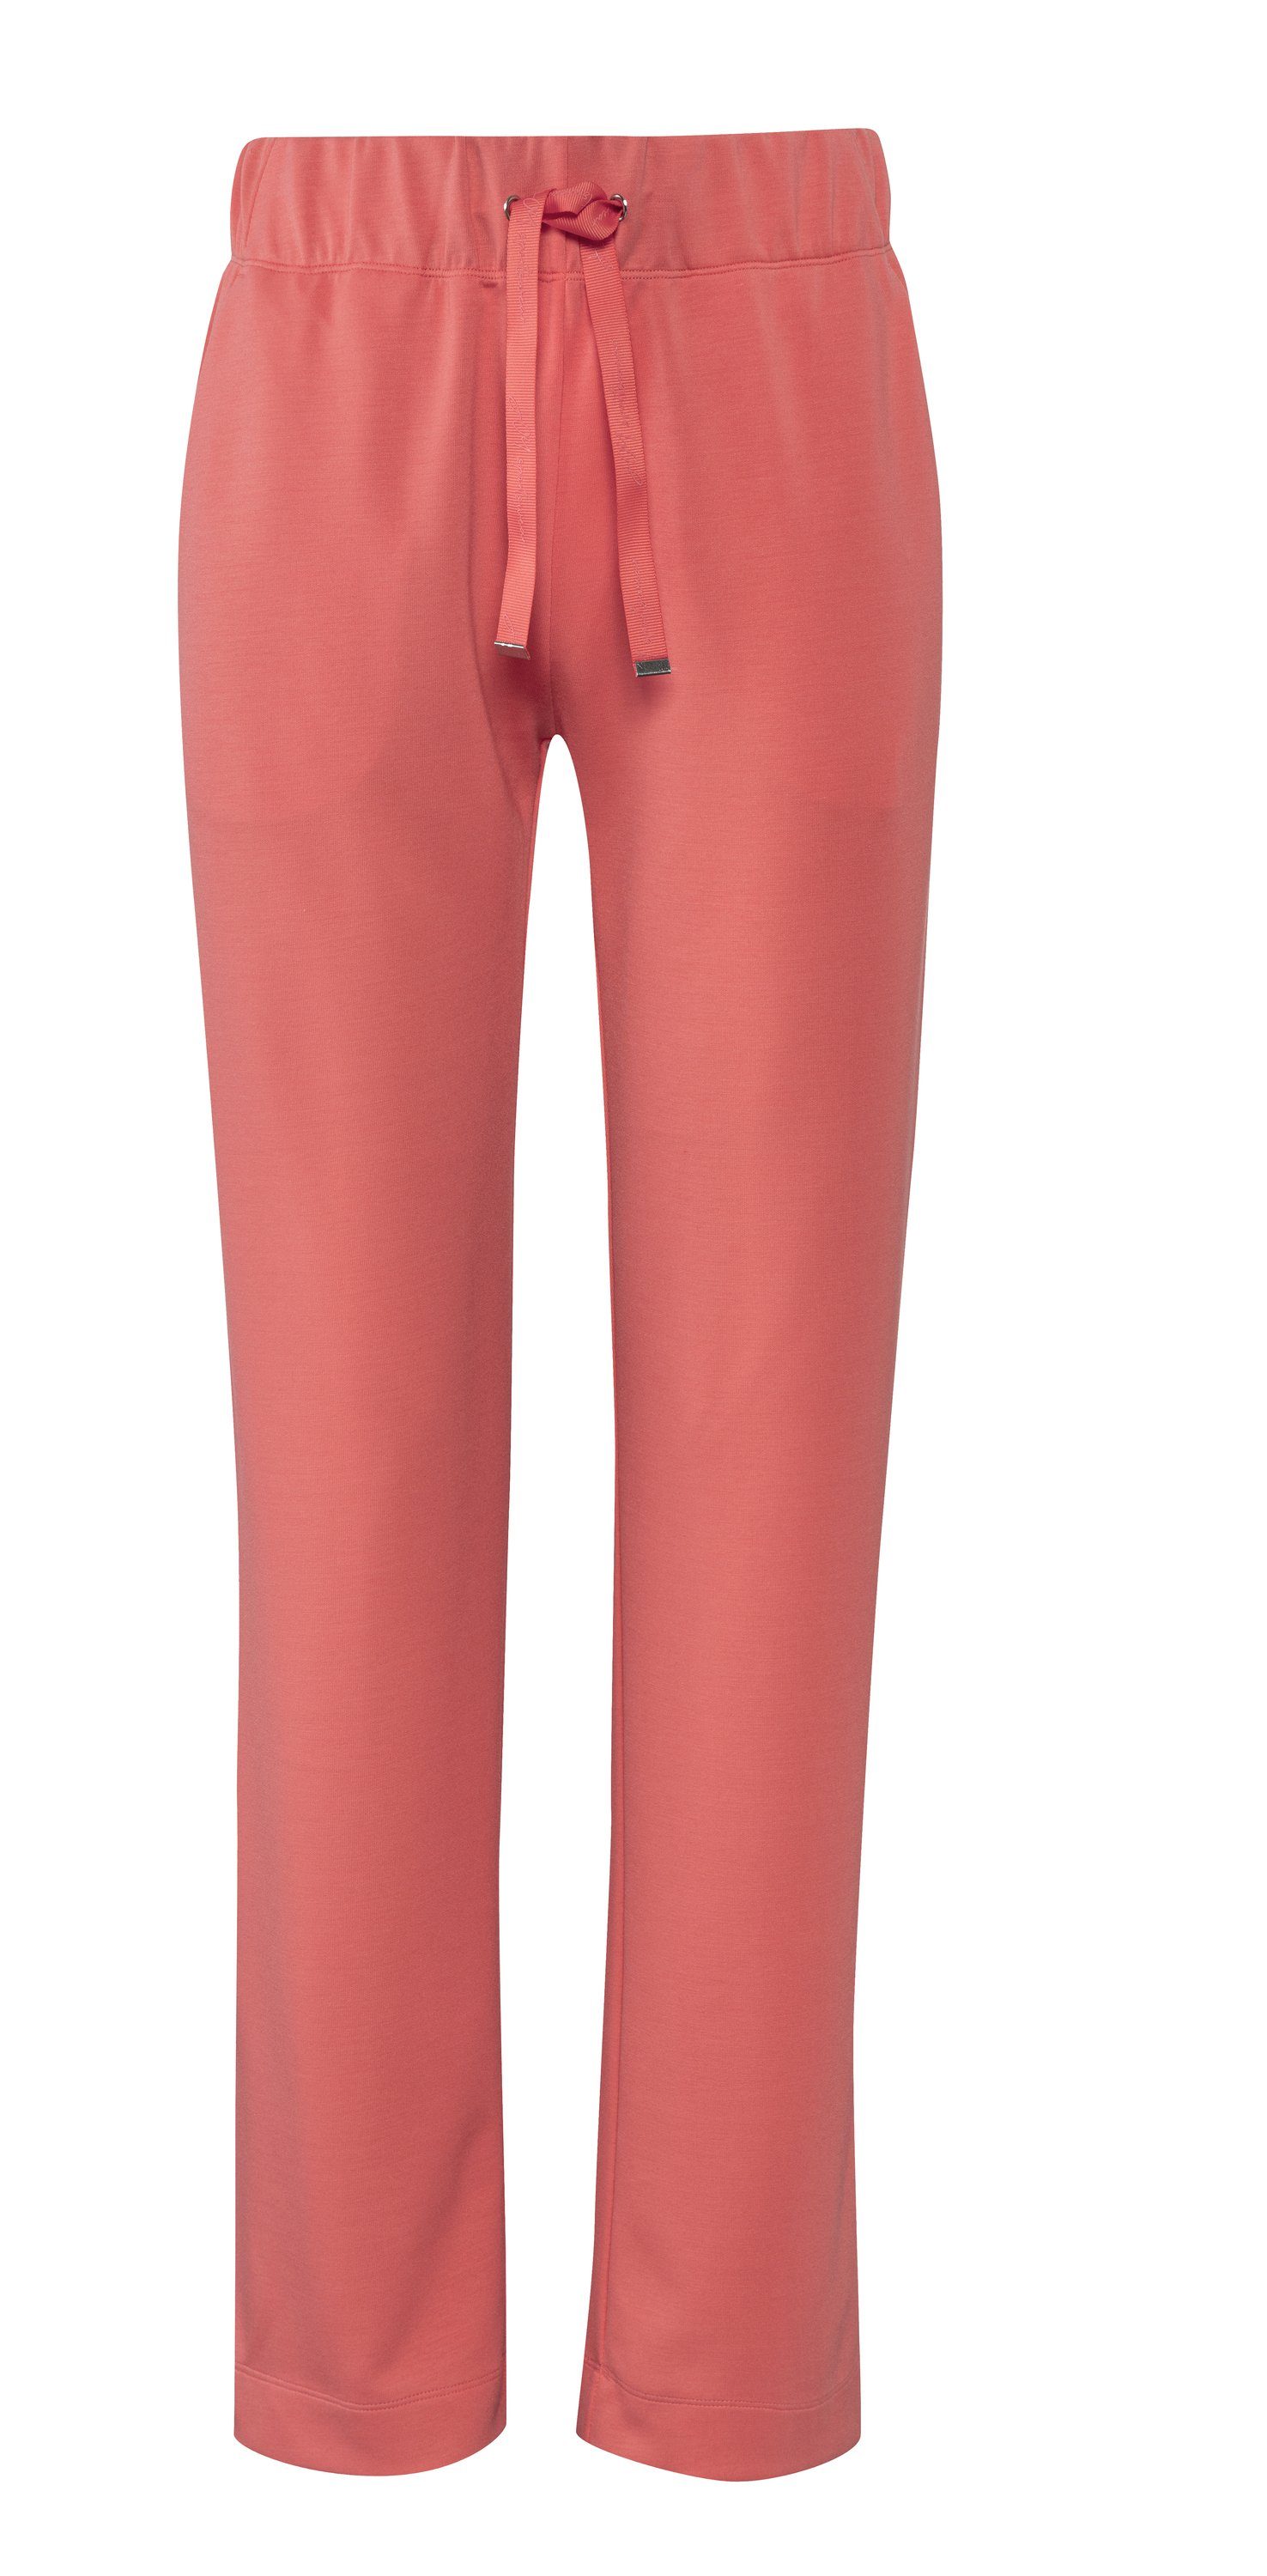 Sporthose AURORA Hose Joy Sportswear coral pink